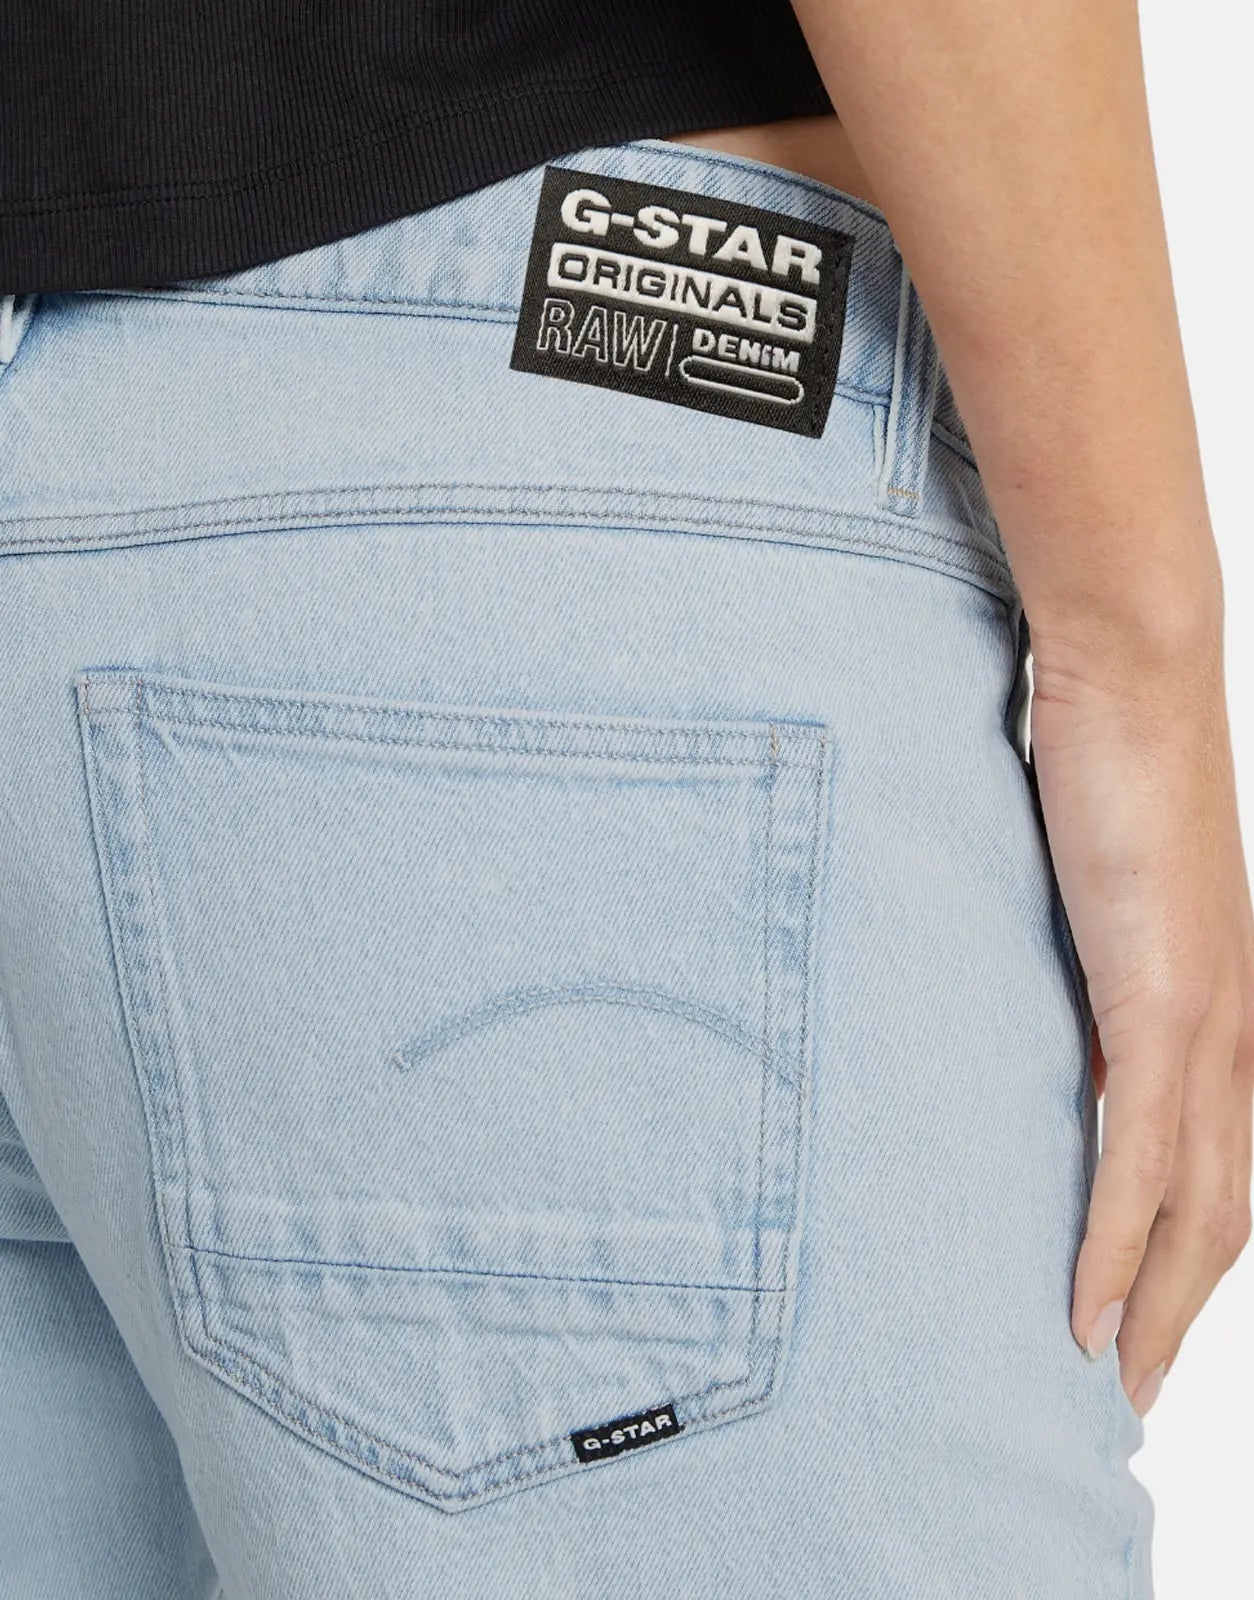 G-Star RAW Kate Boyfriend Light Wash Jeans - Subwear